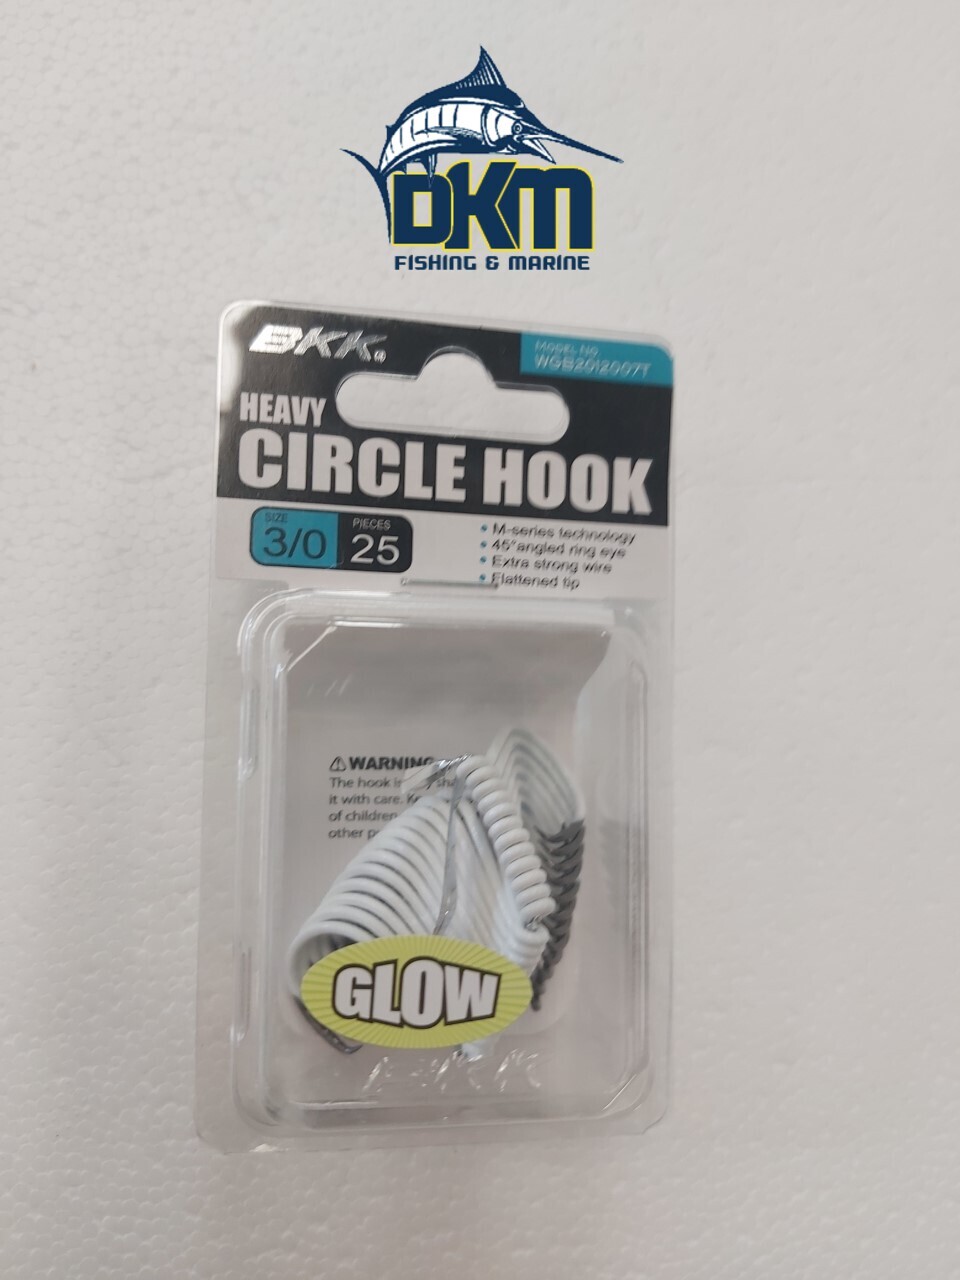 BKK Heavy Circle Hook 25 Pack Glow 3/0